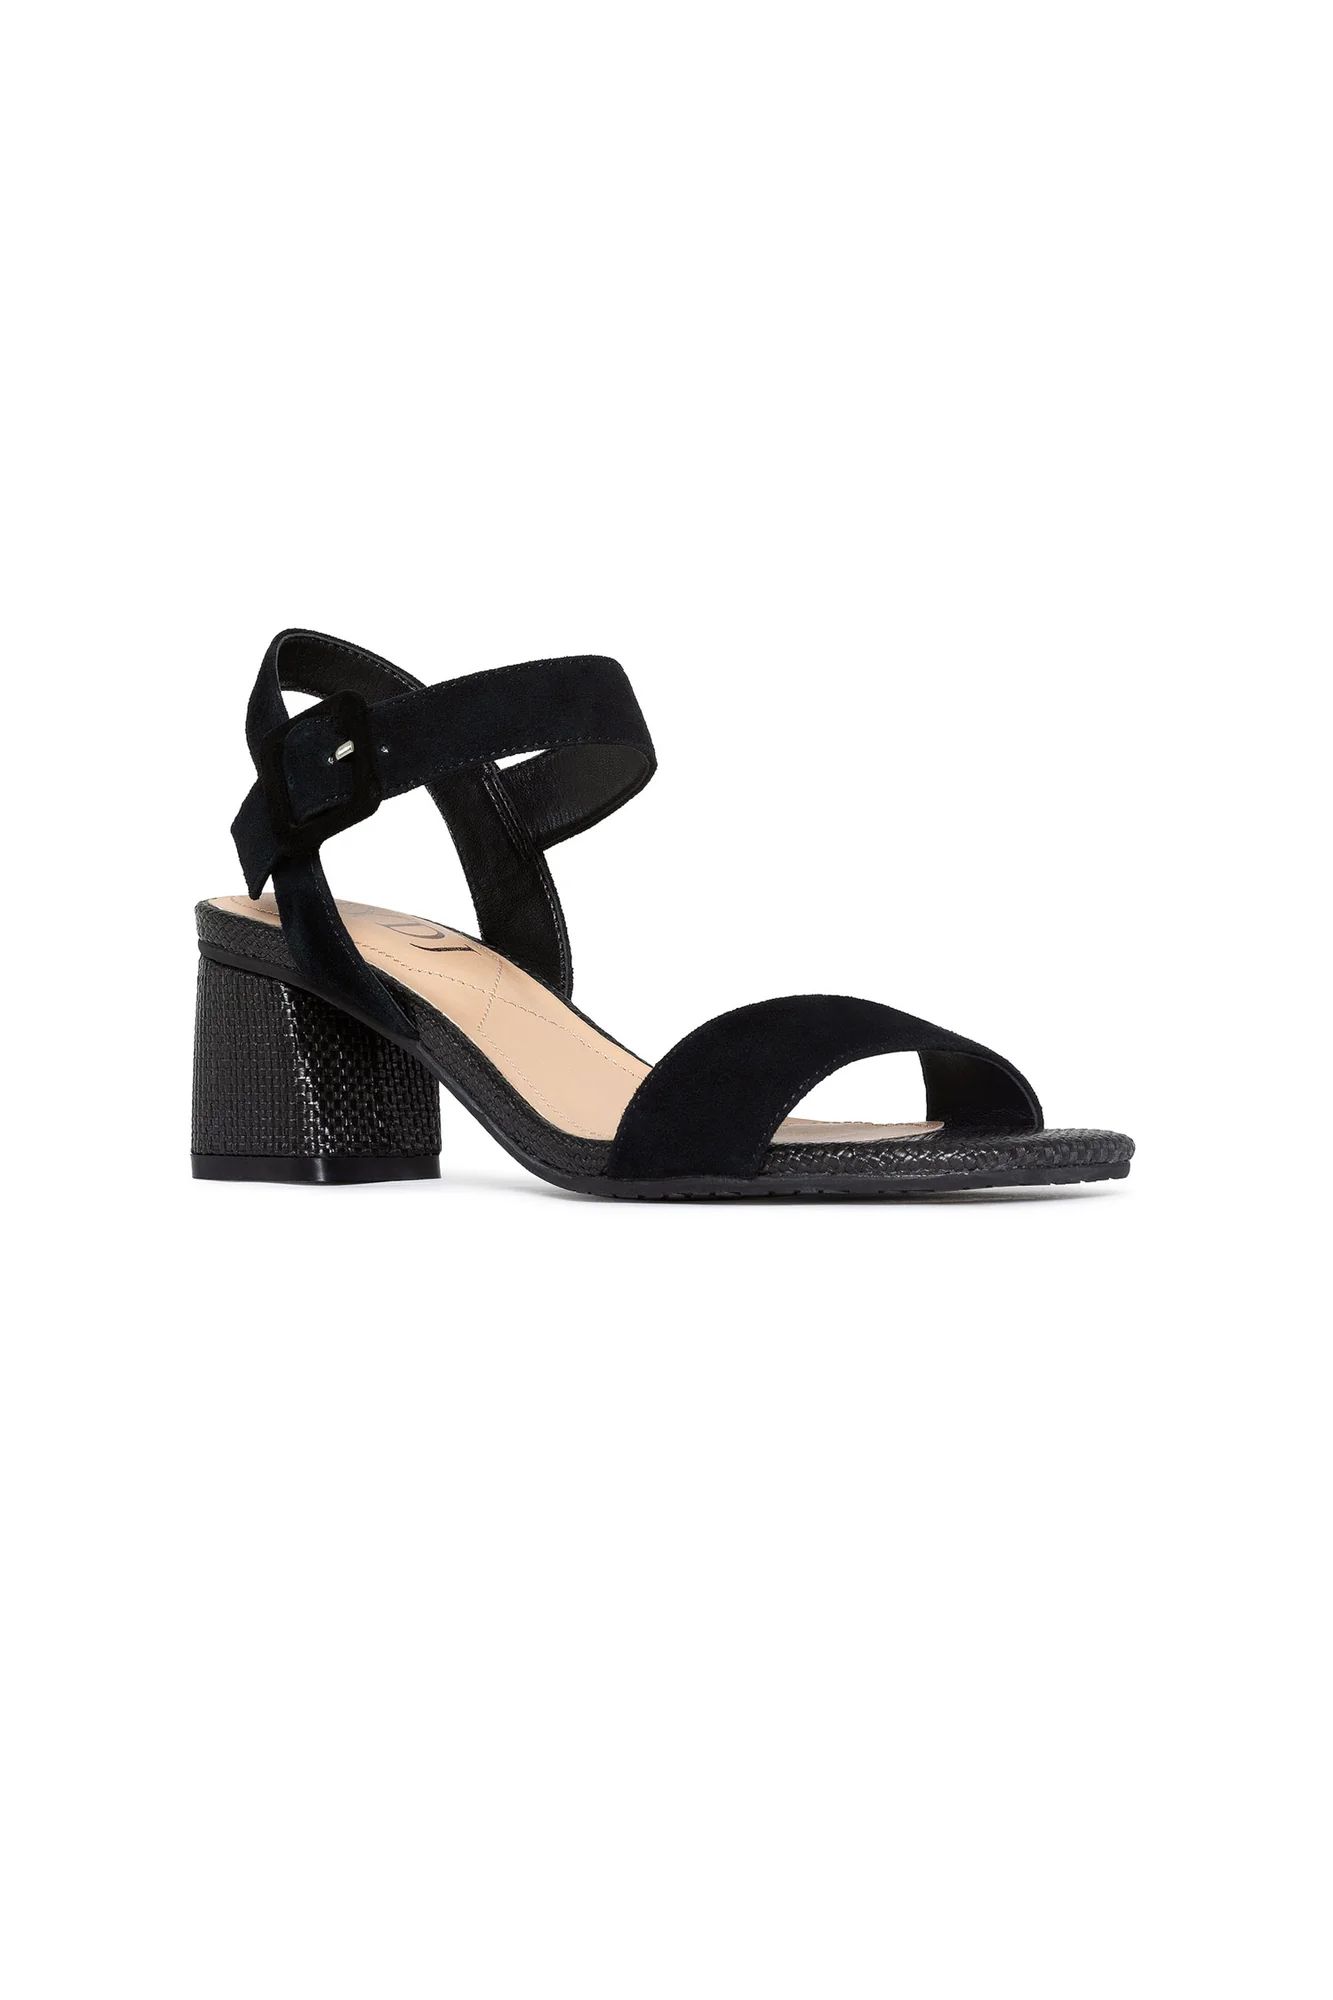 Gaiana High Heel Sandals - Black | NYDJ